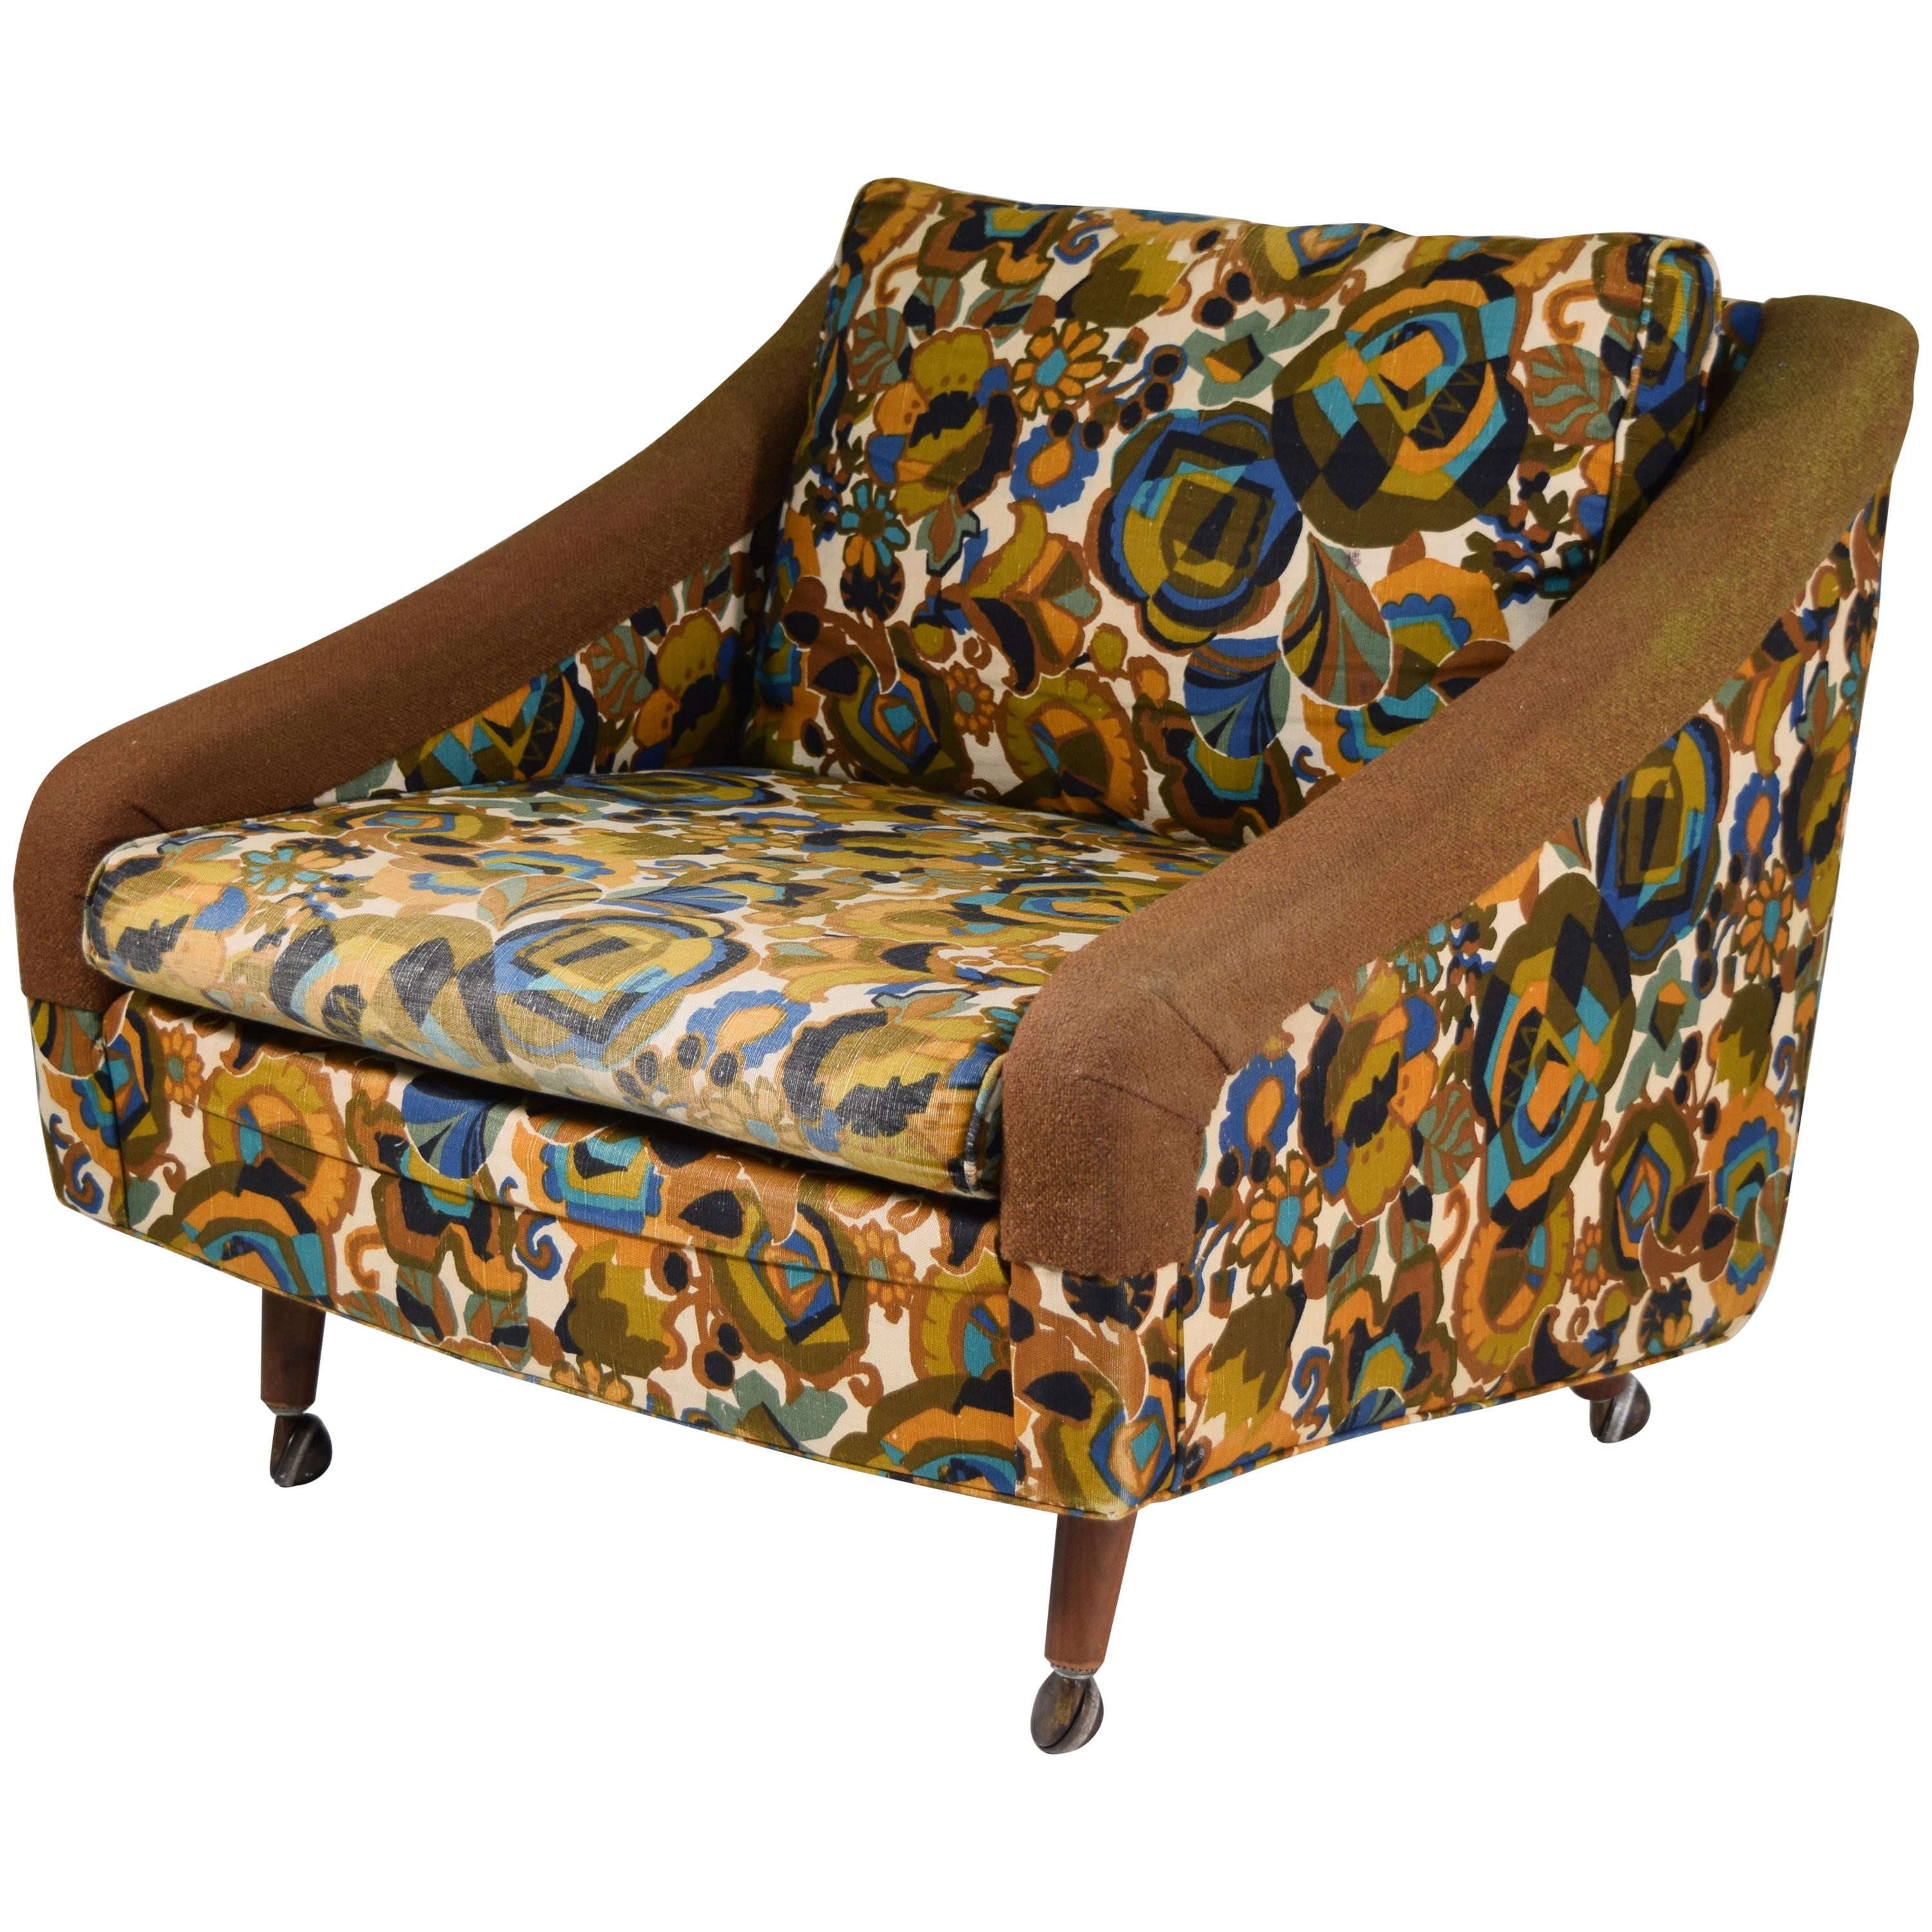 Low Profile Lounge Chair by W & J Sloane